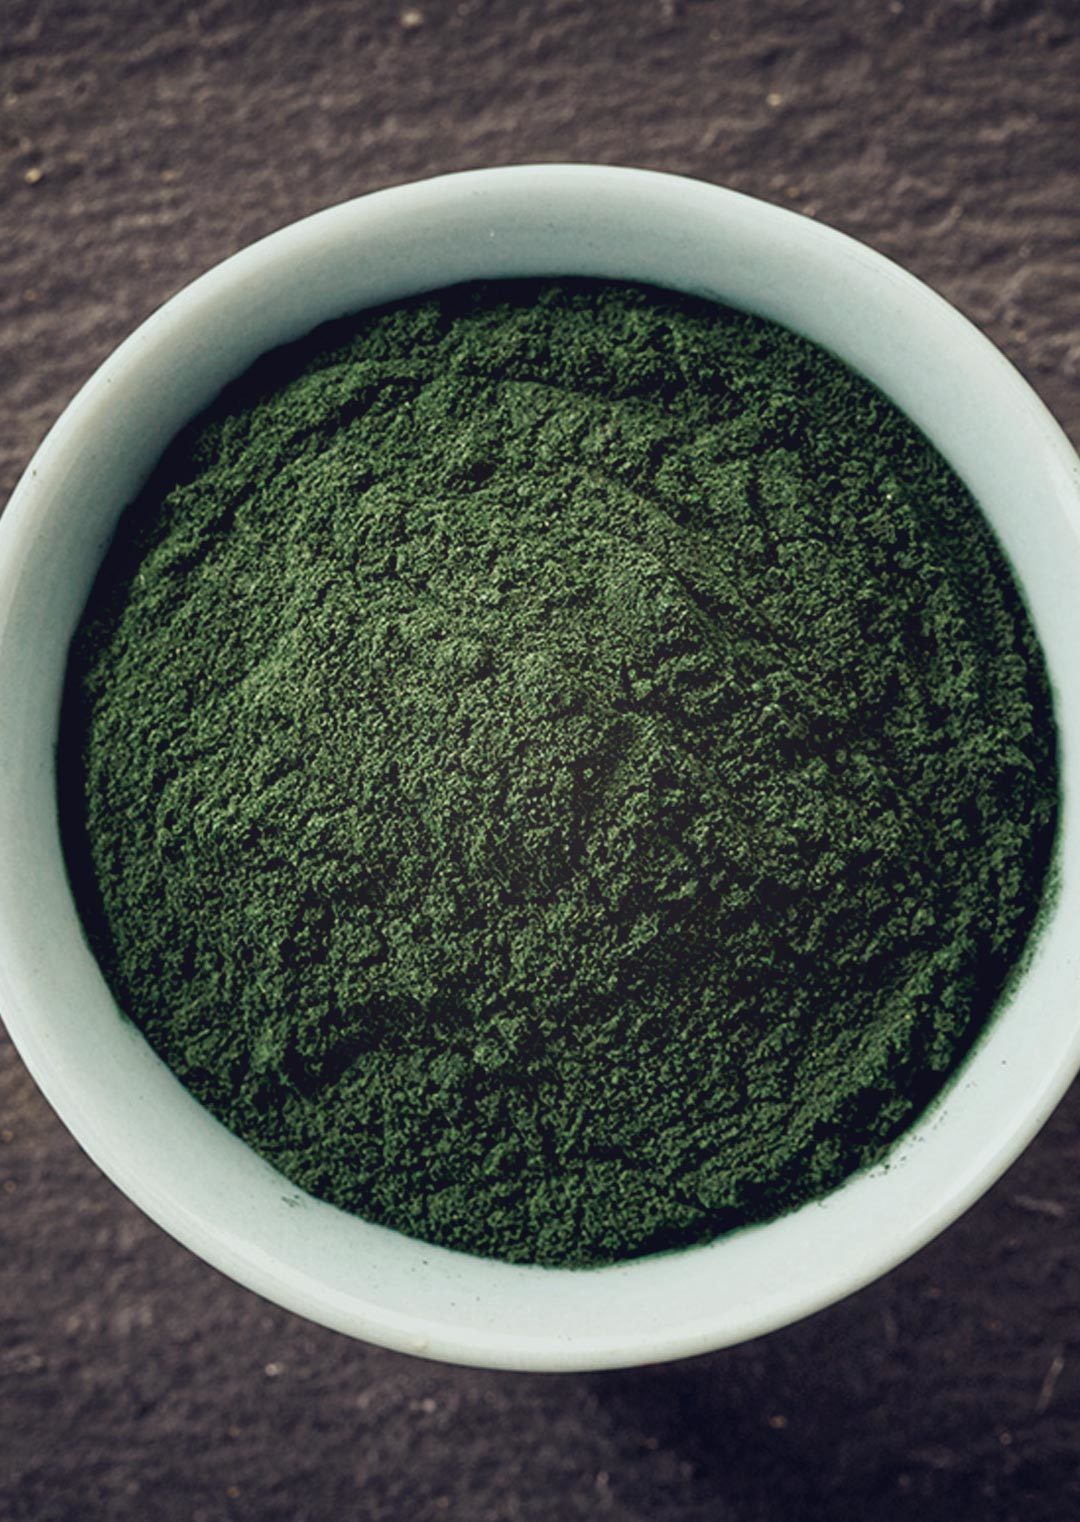 zesty-life-spirulina-powder-plant-protein-iron-superfood-plant-based